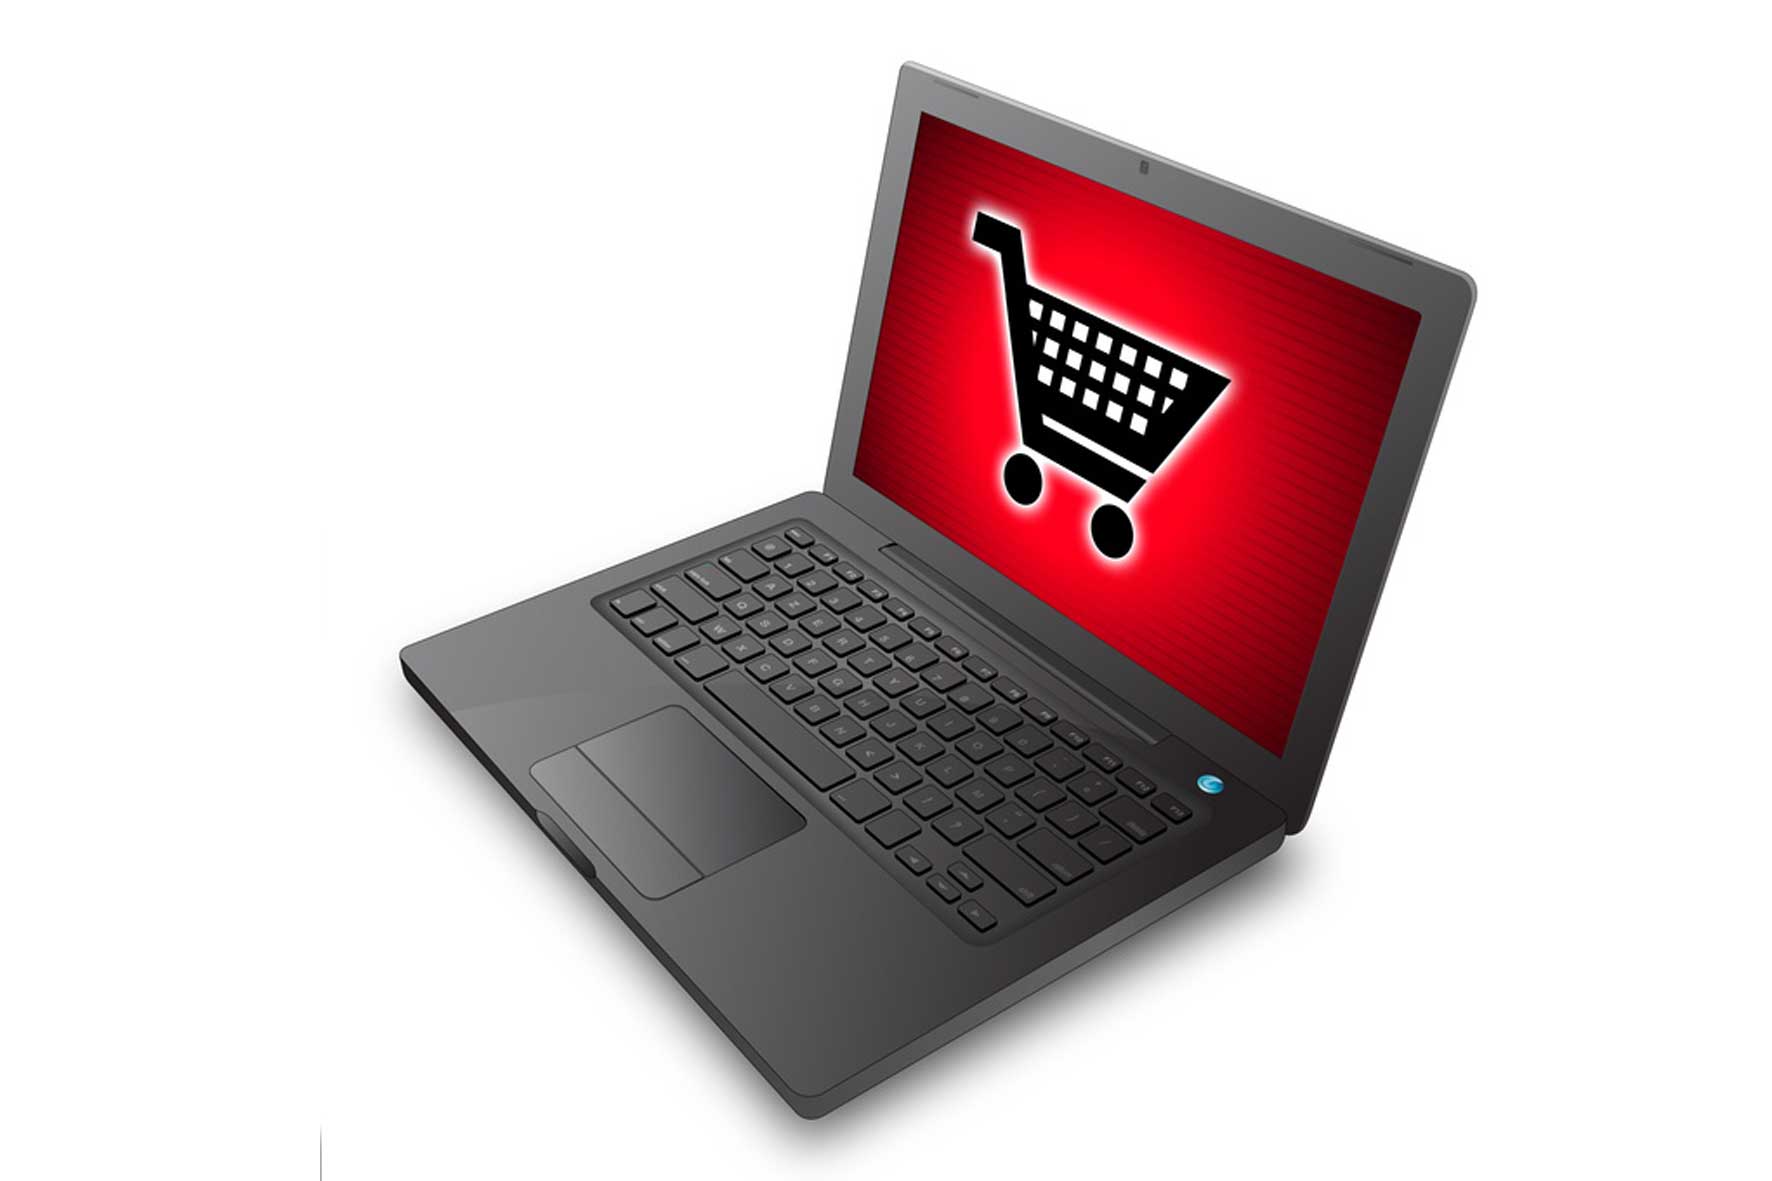 Ponad 30 mld zł na rynku e-commerce